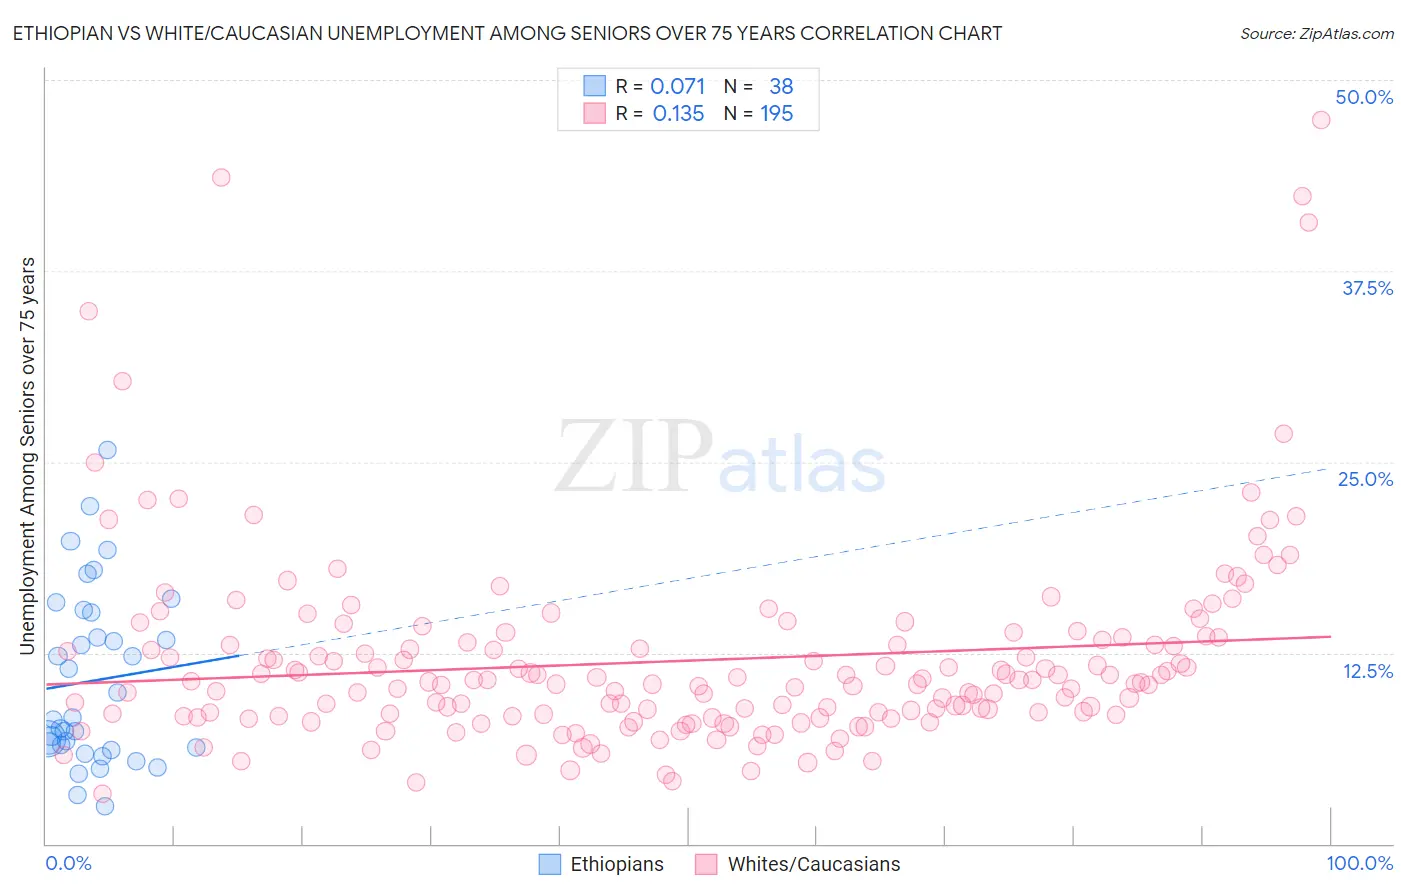 Ethiopian vs White/Caucasian Unemployment Among Seniors over 75 years